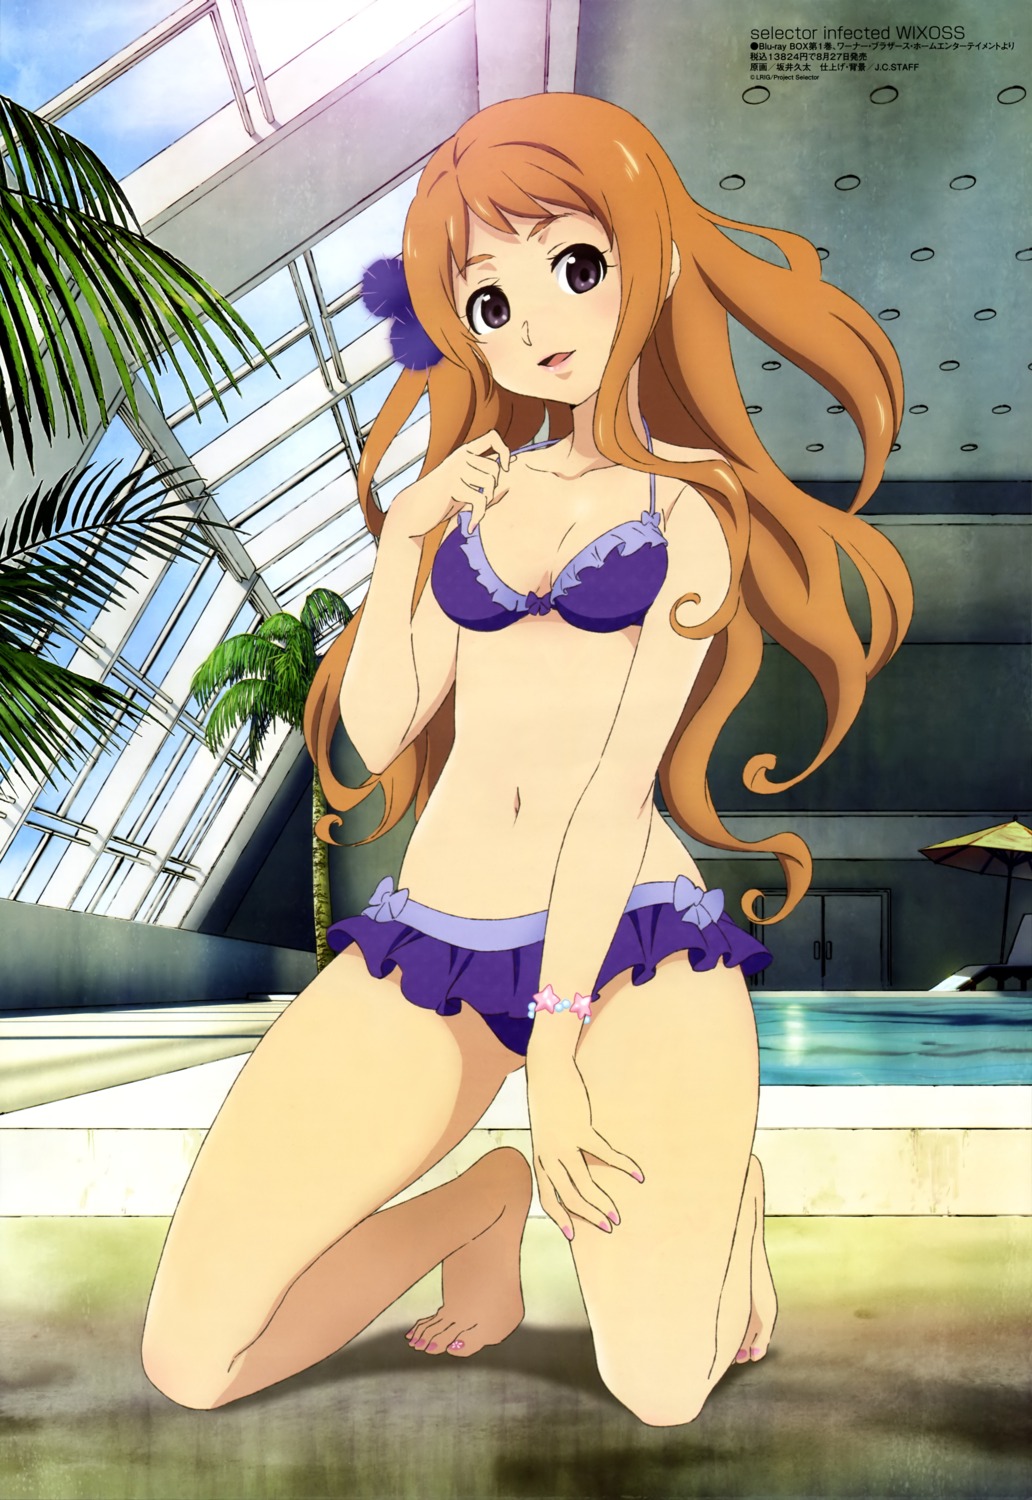 aoi_akira bikini sakai_kyuuta selector_infected_wixoss swimsuits